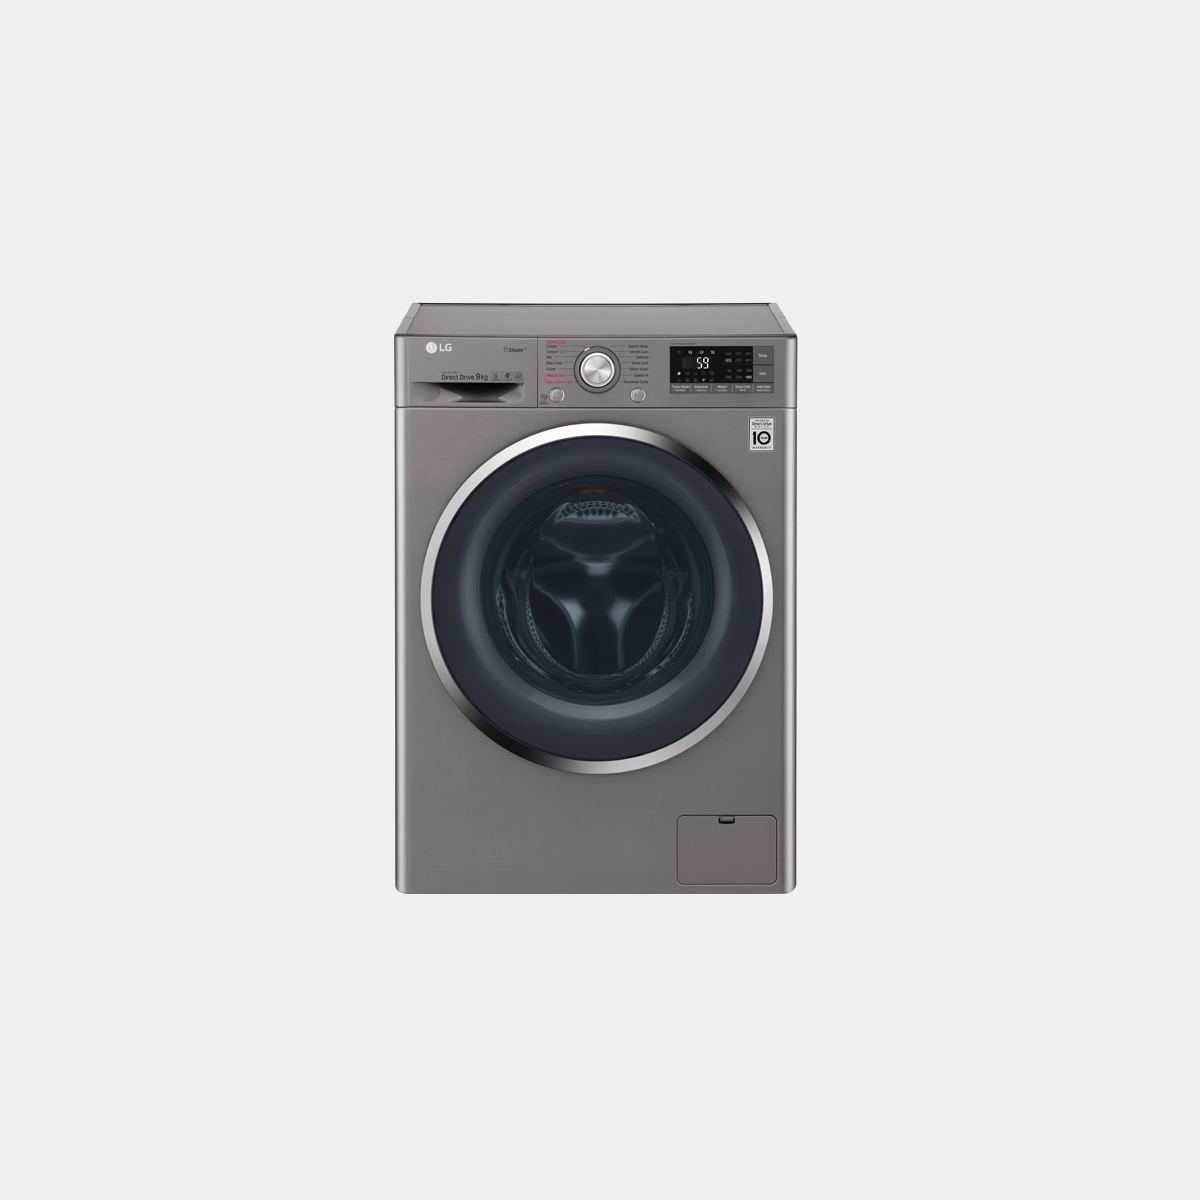 LG F4j7vy2t lavadora inox de 9kg rpm con Wifi